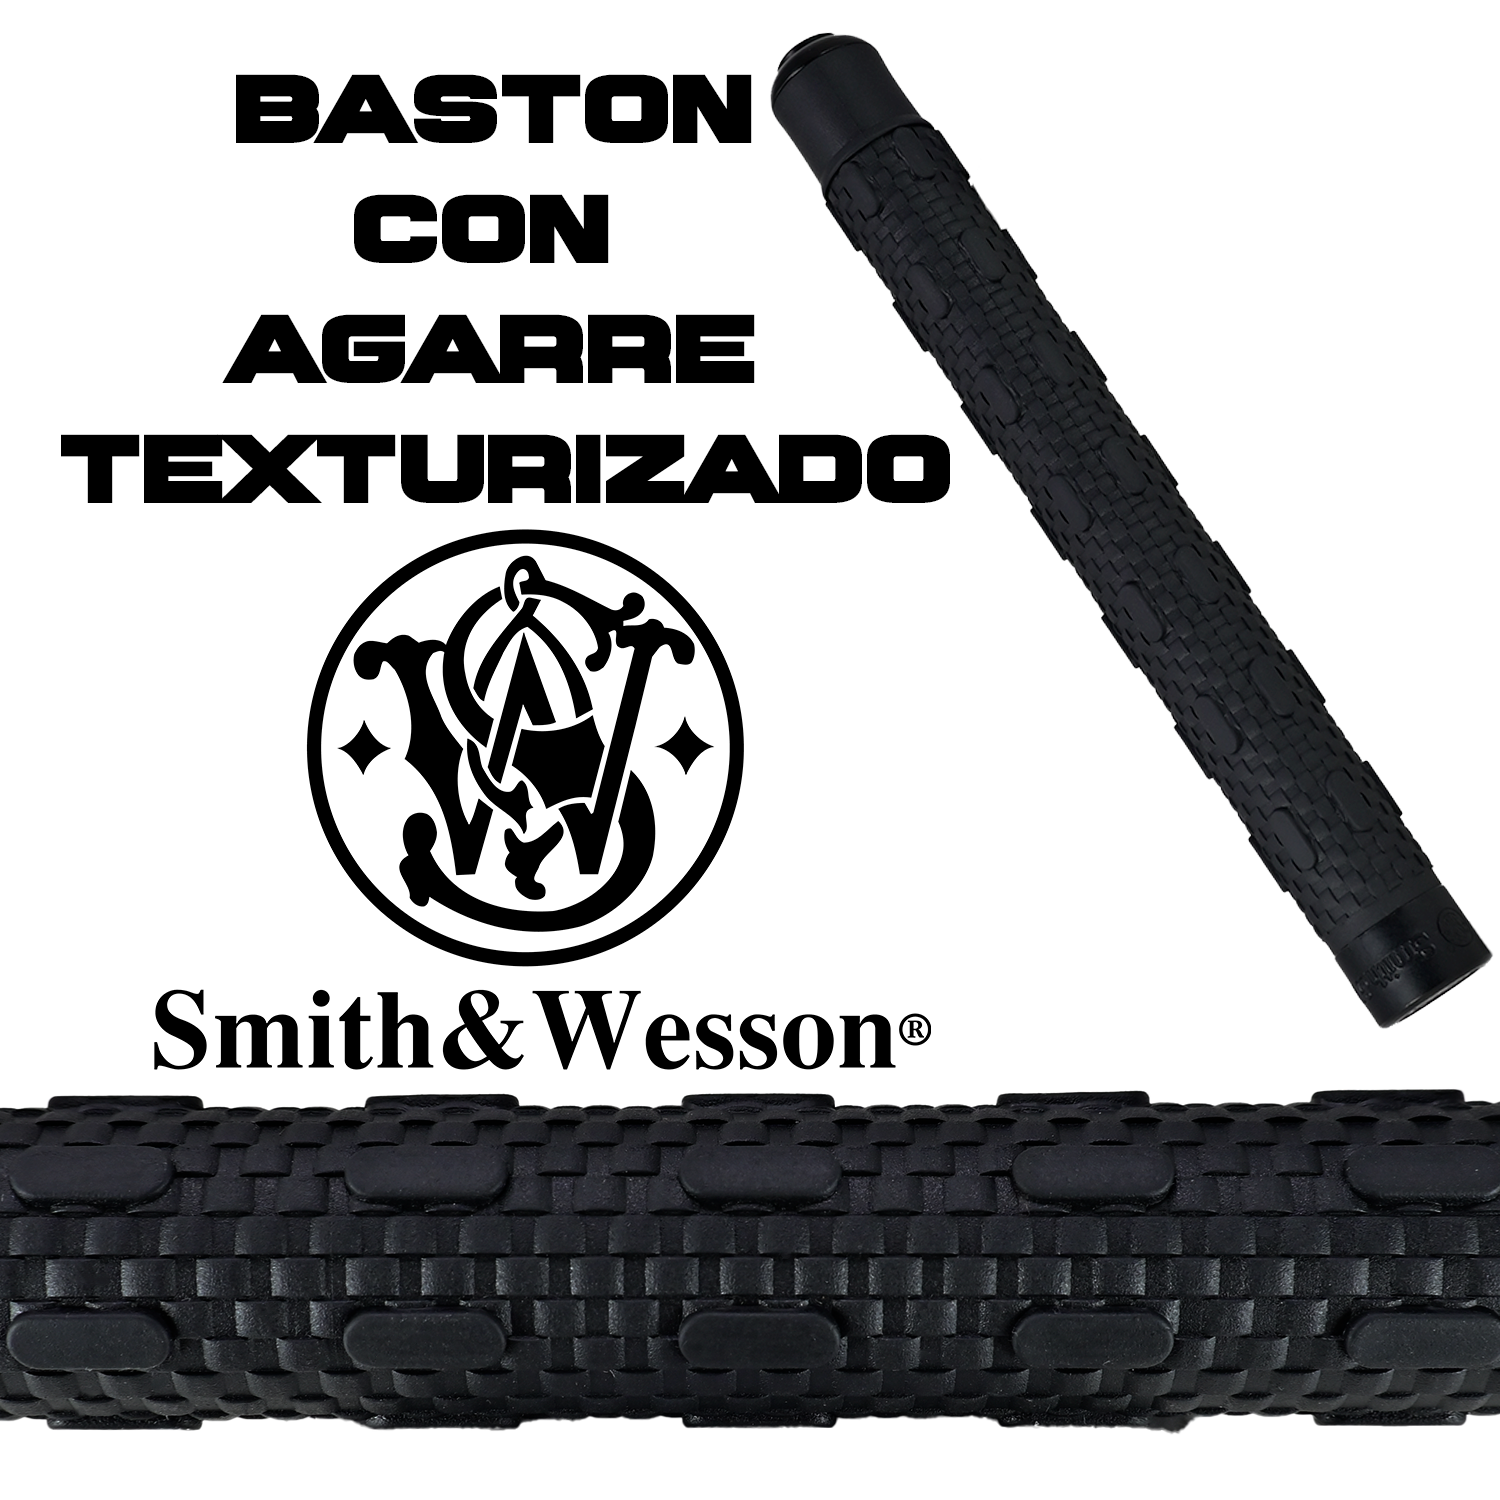 Baston Retractil 24 pulgadas Smith & Wesson